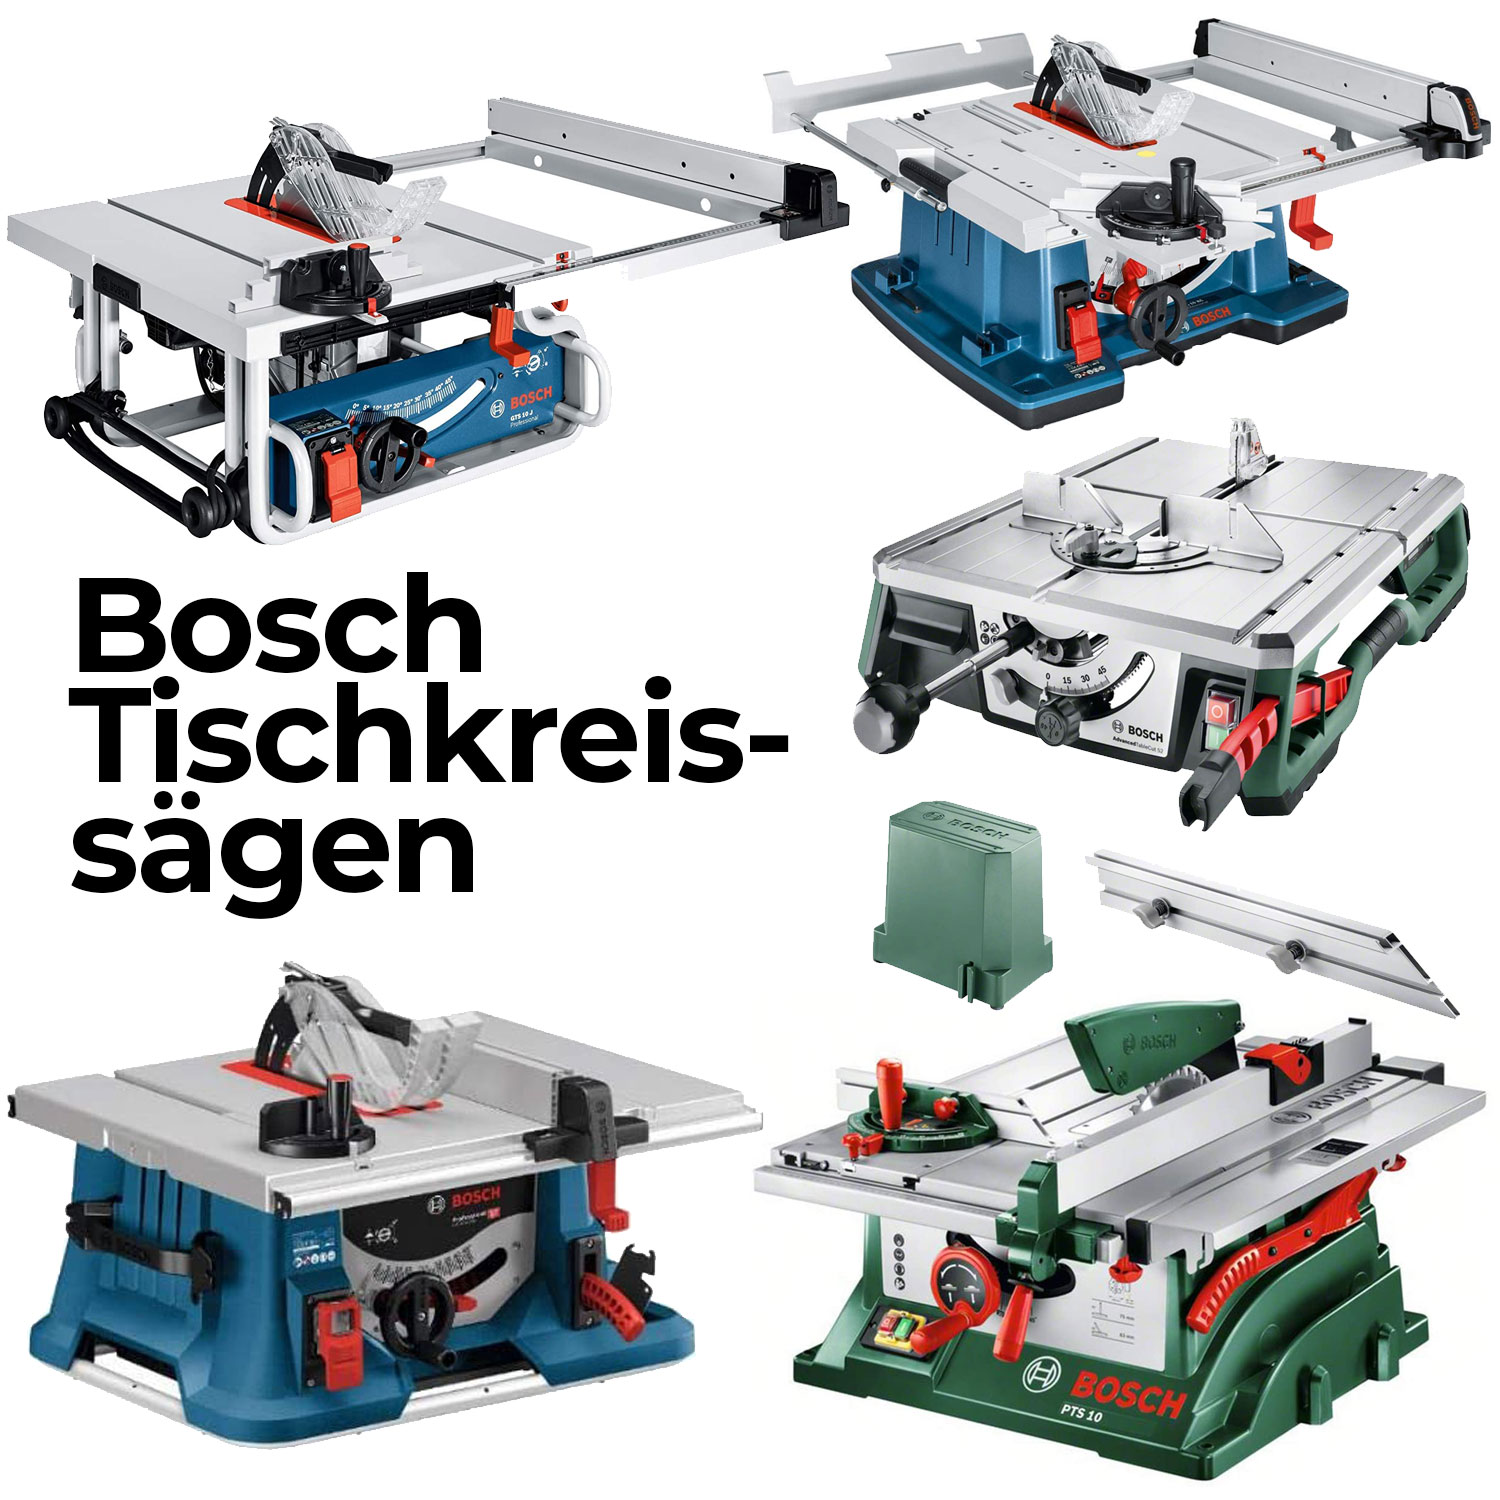 Bosch Tischkreissägen Vergleich GTS 10 XC, 635-216, PTS 10 T